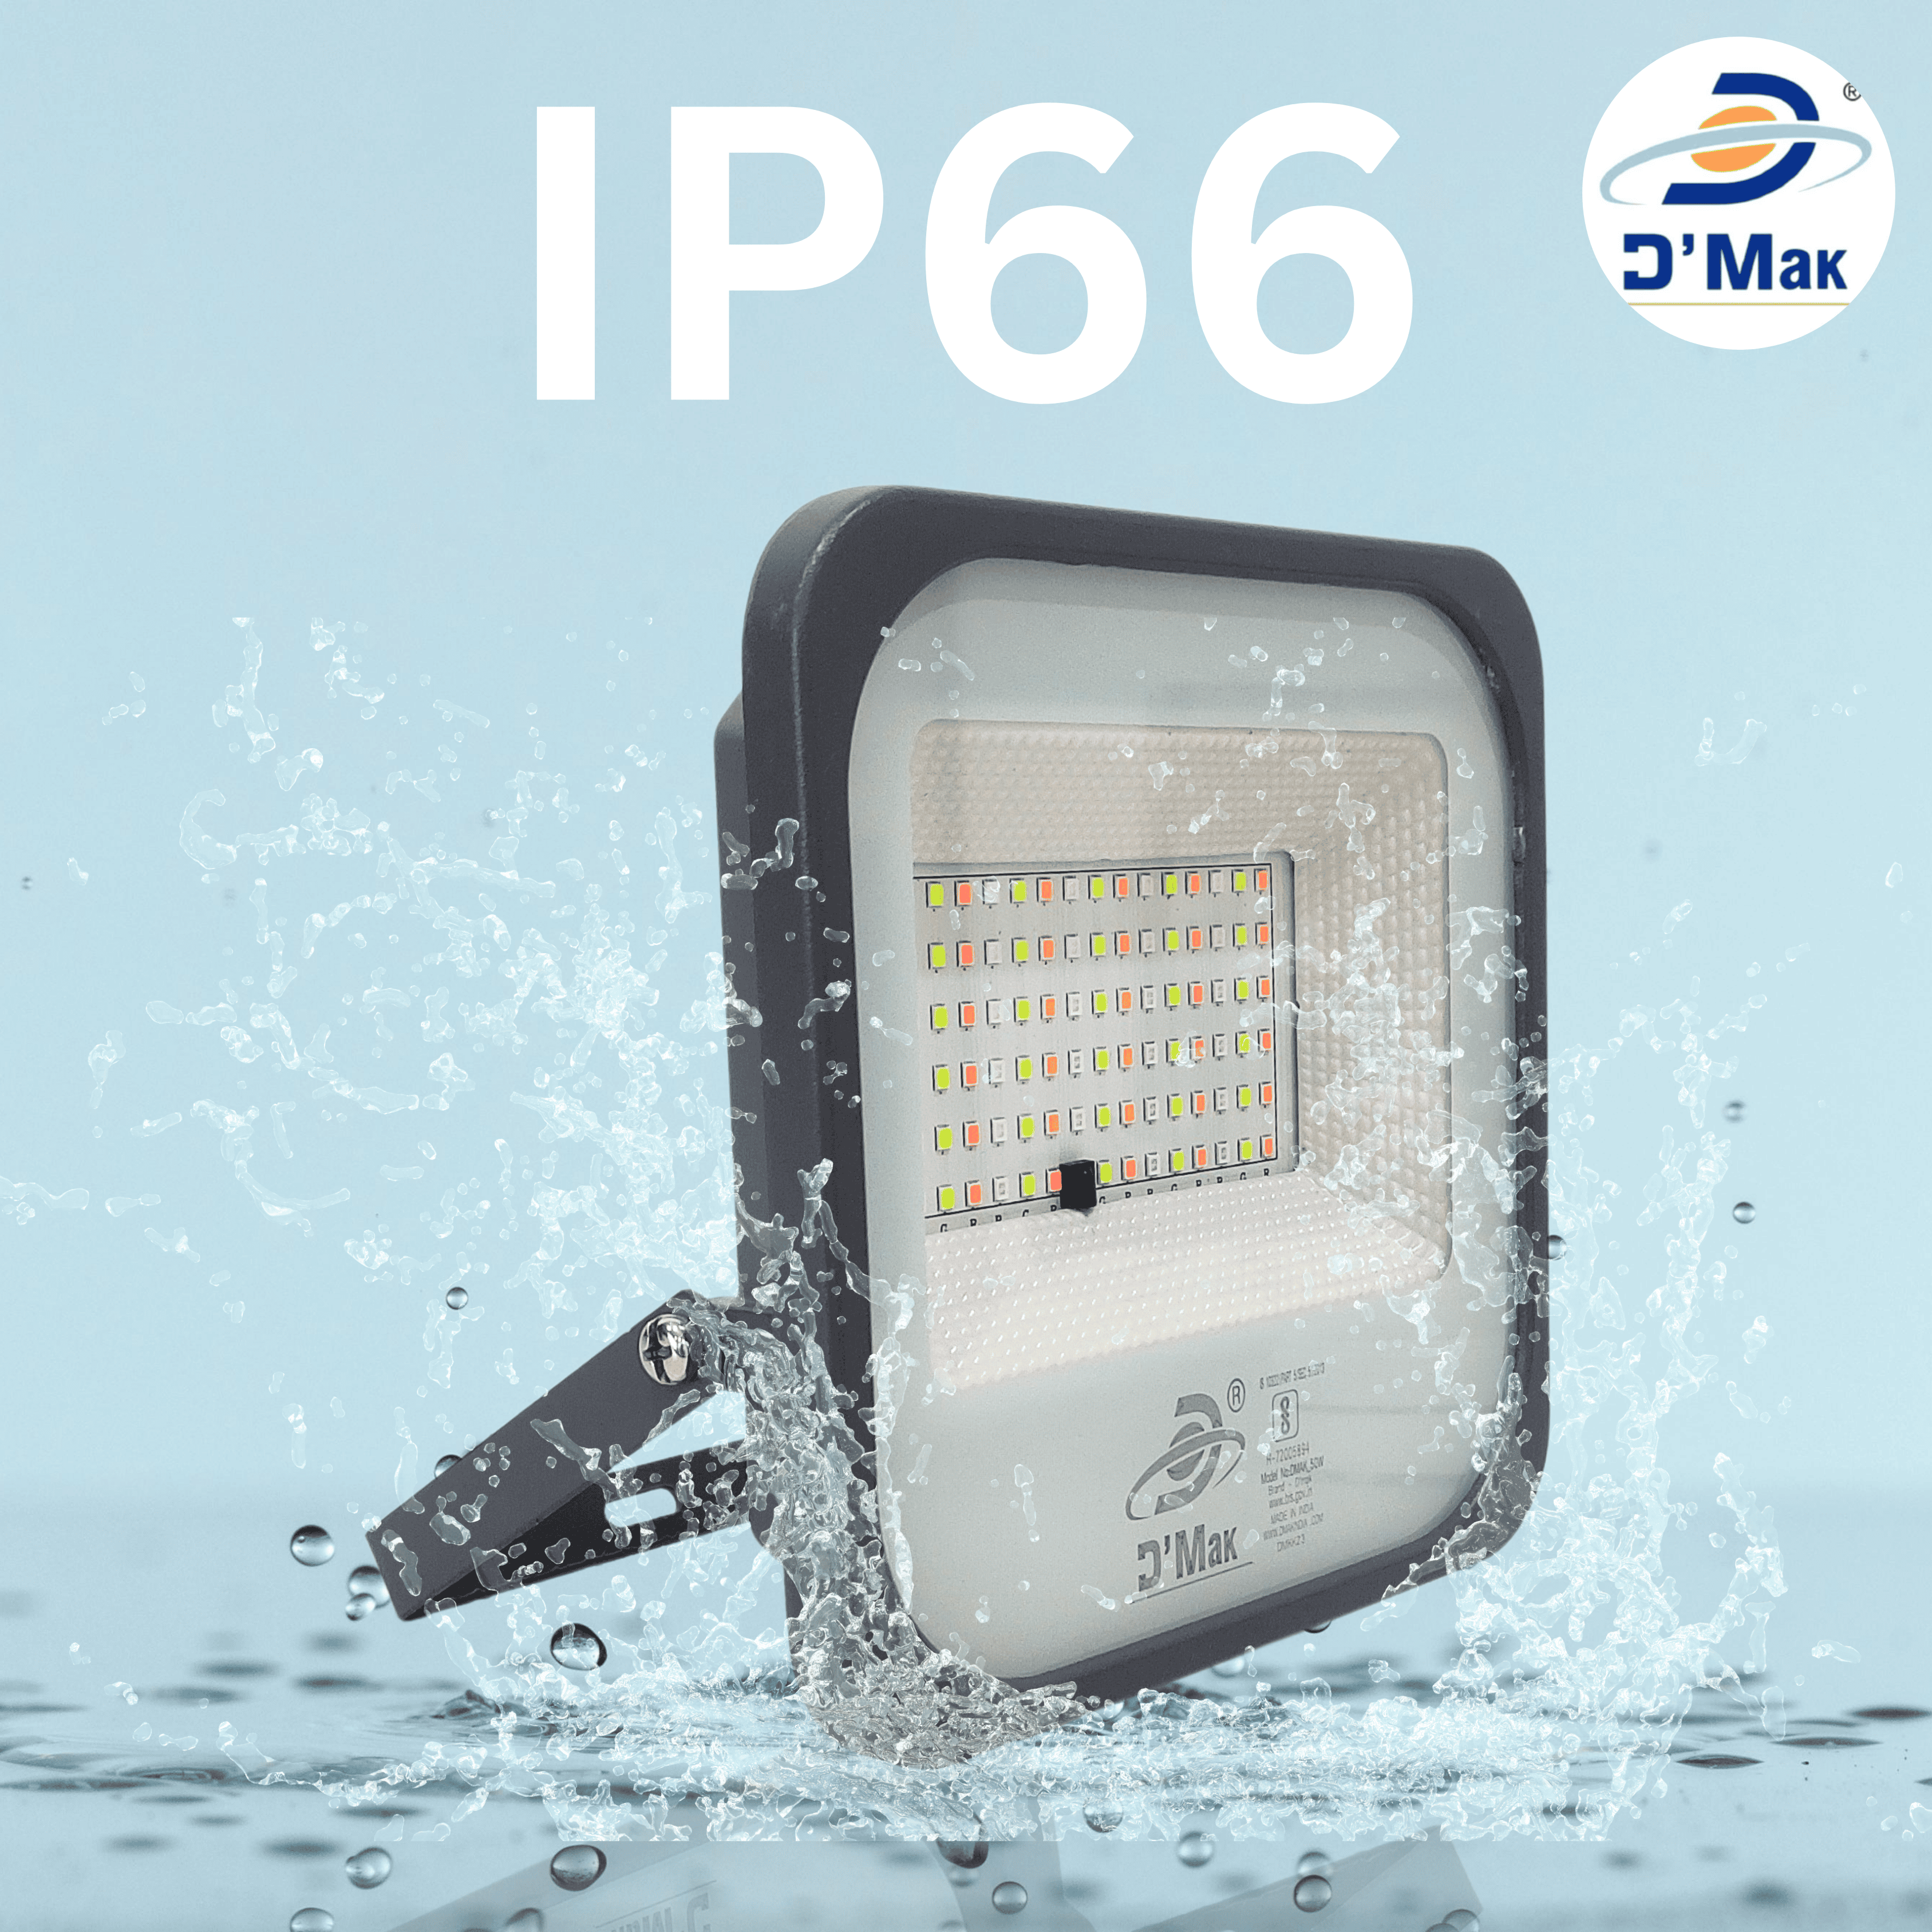 50 Watt LED RGB Flood Light Grey Body Waterproof IP65 For Outdoor Purposes